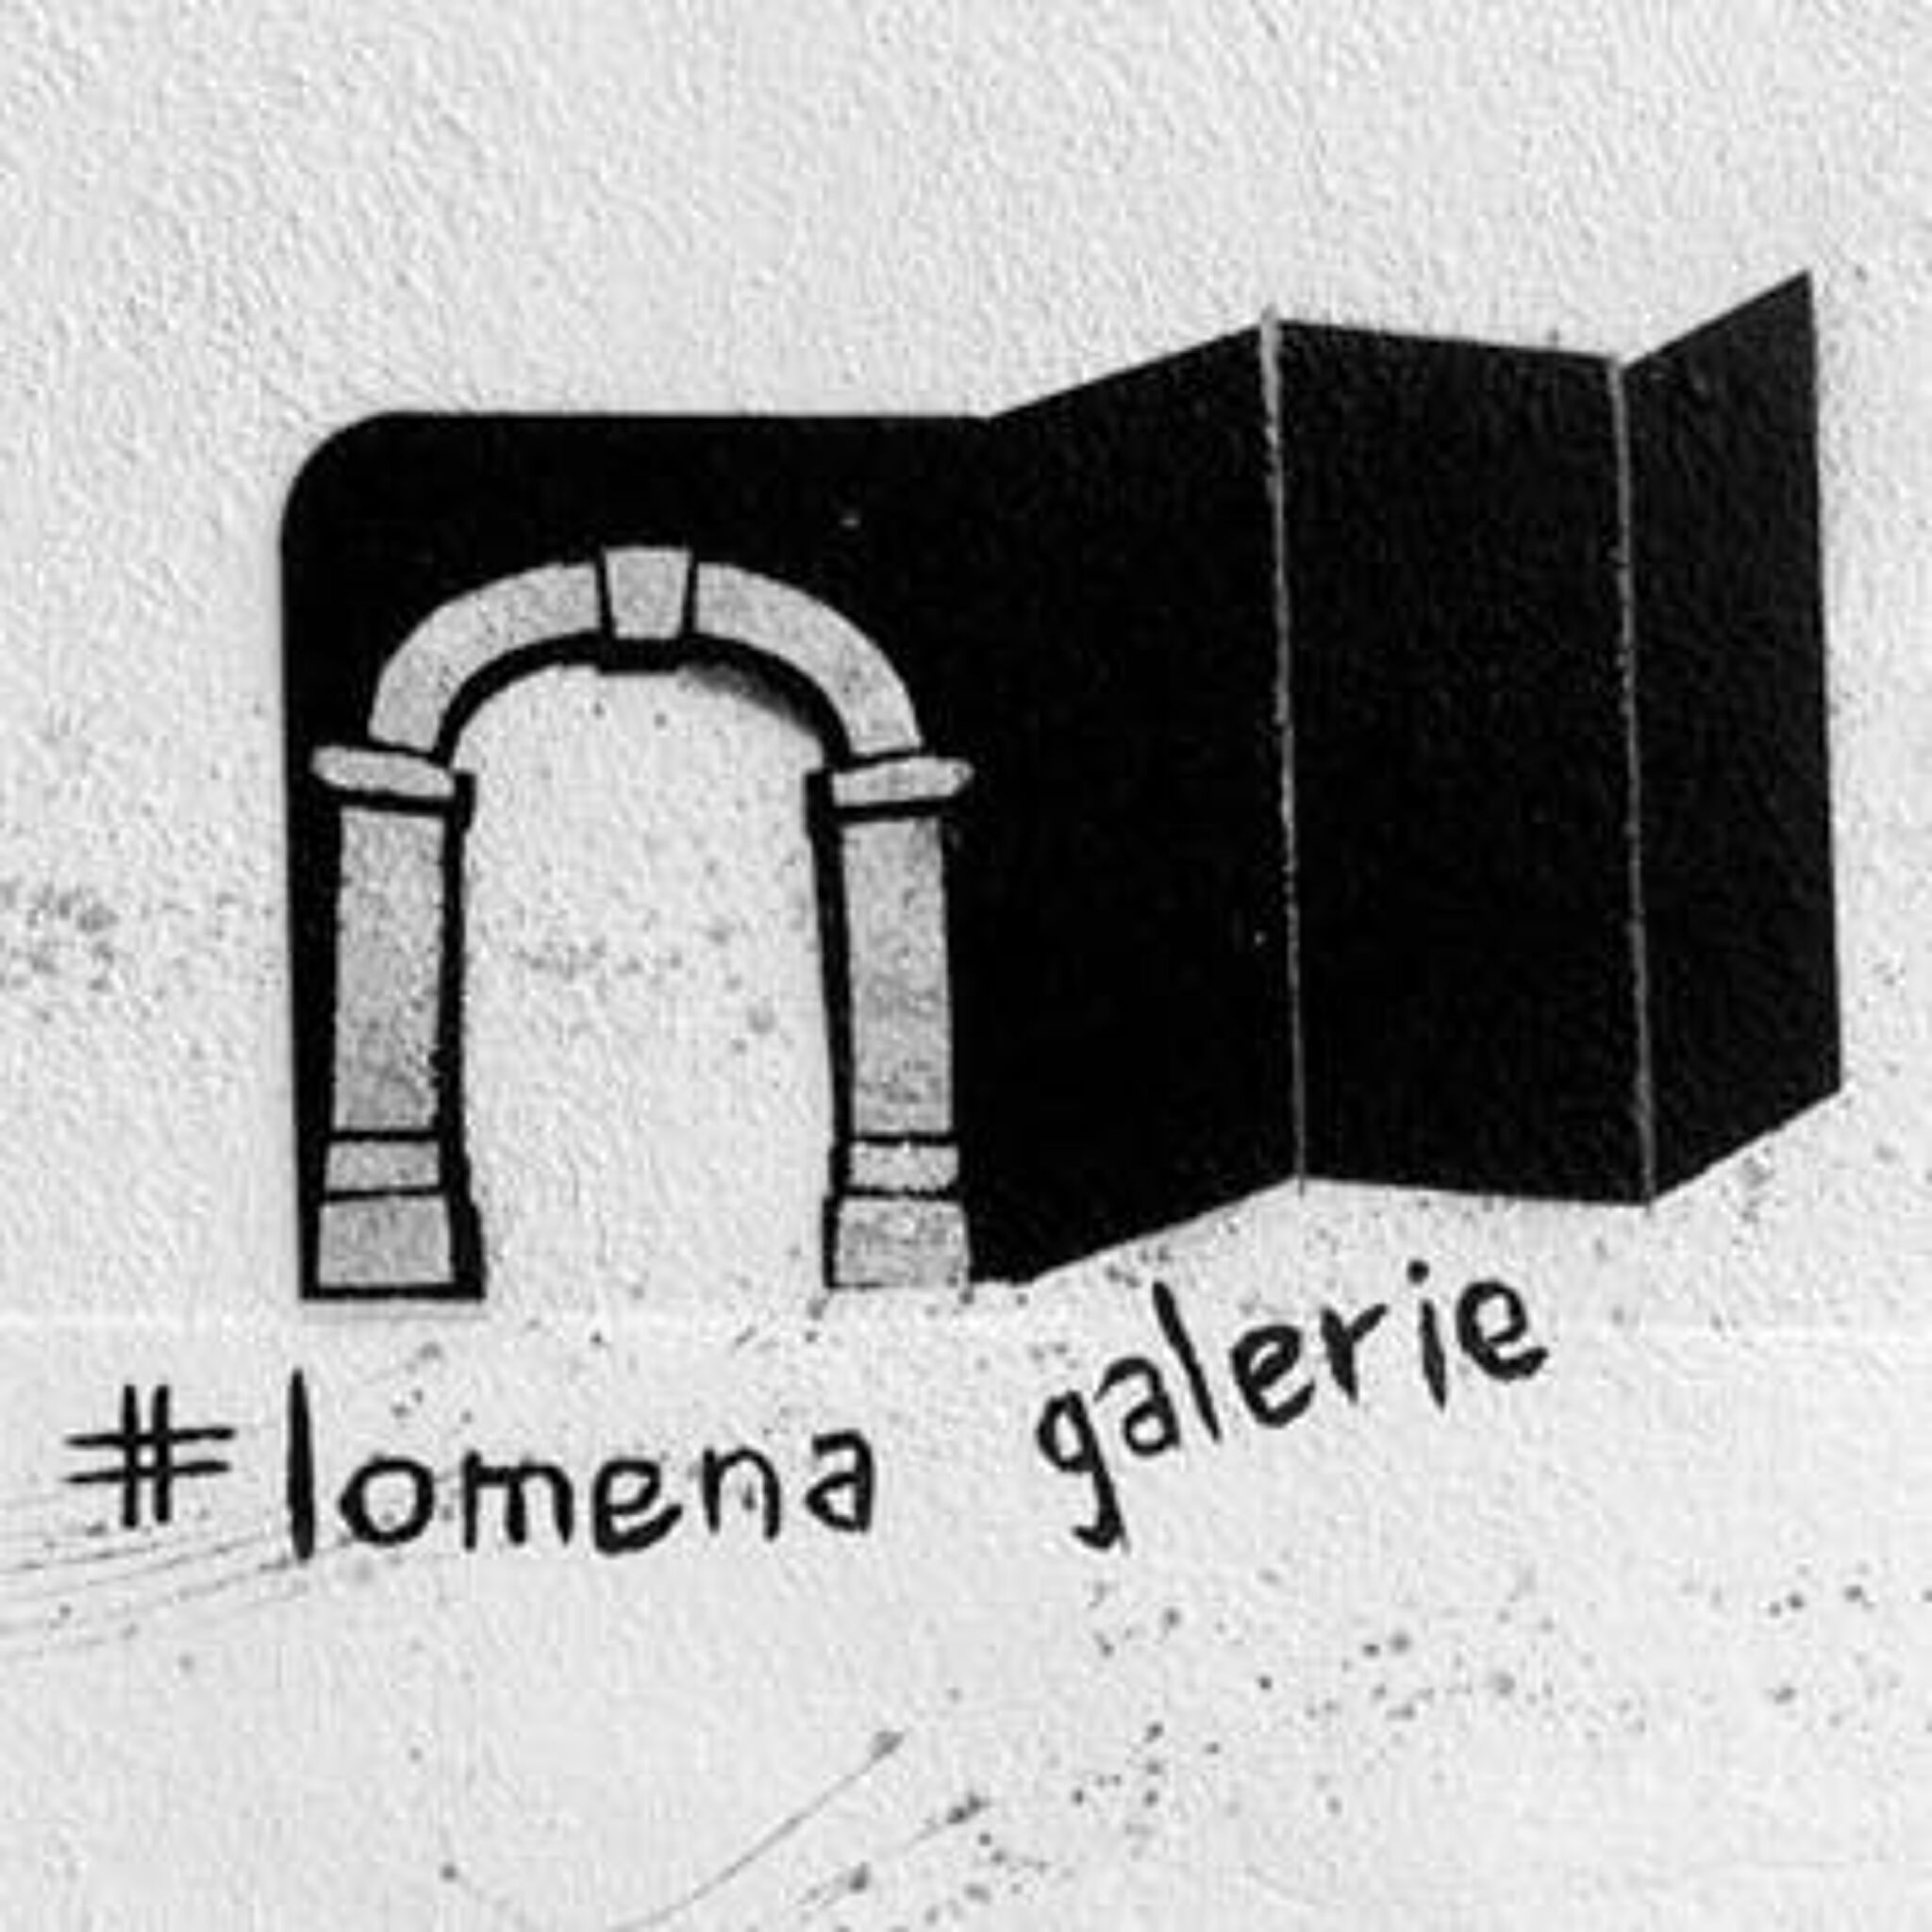 &mdash;Lomena gallery